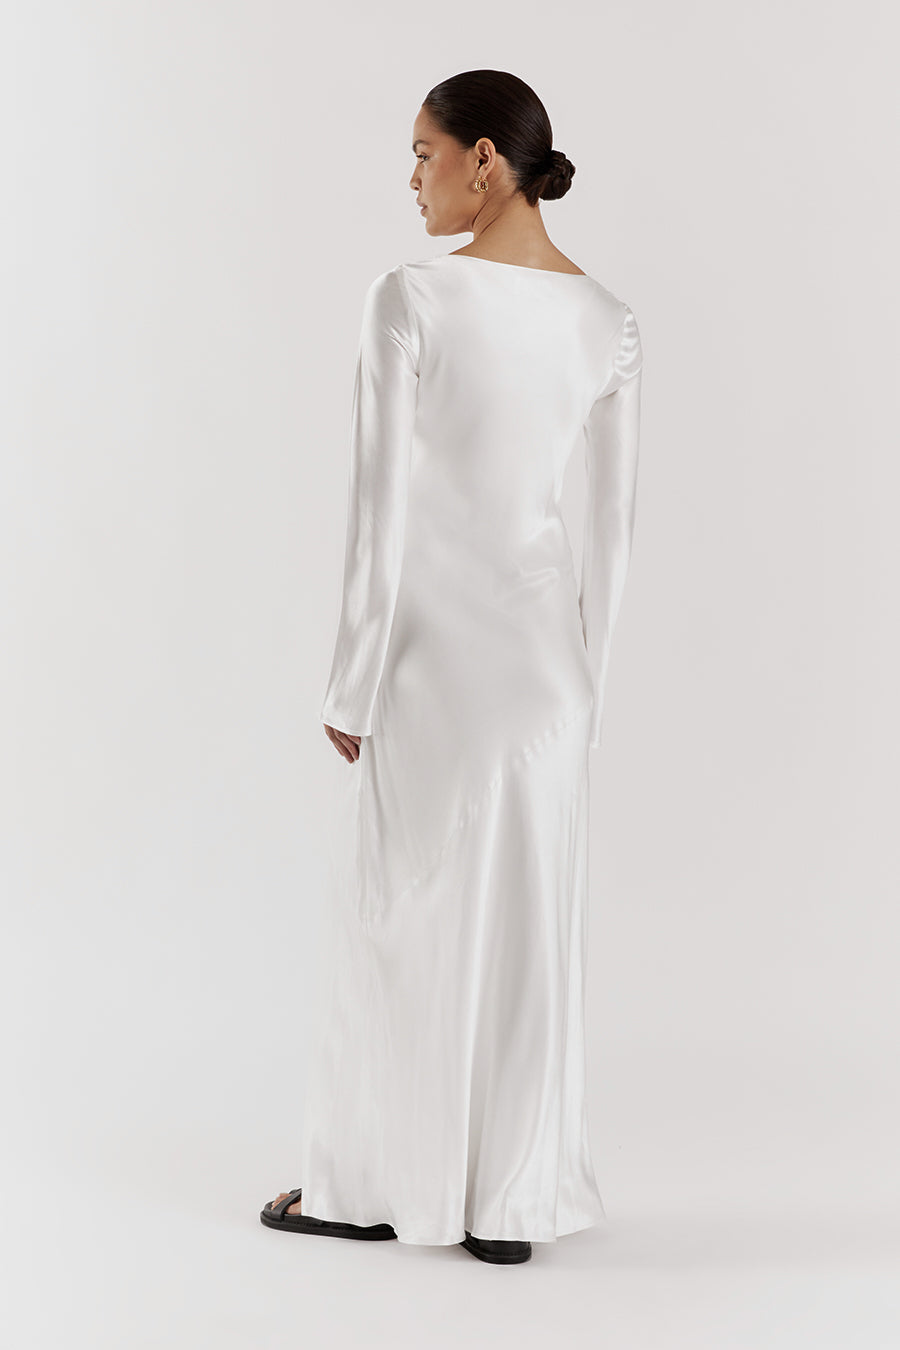 White Satin Strappy Cowl Neck Shift Dress | PrettyLittleThing